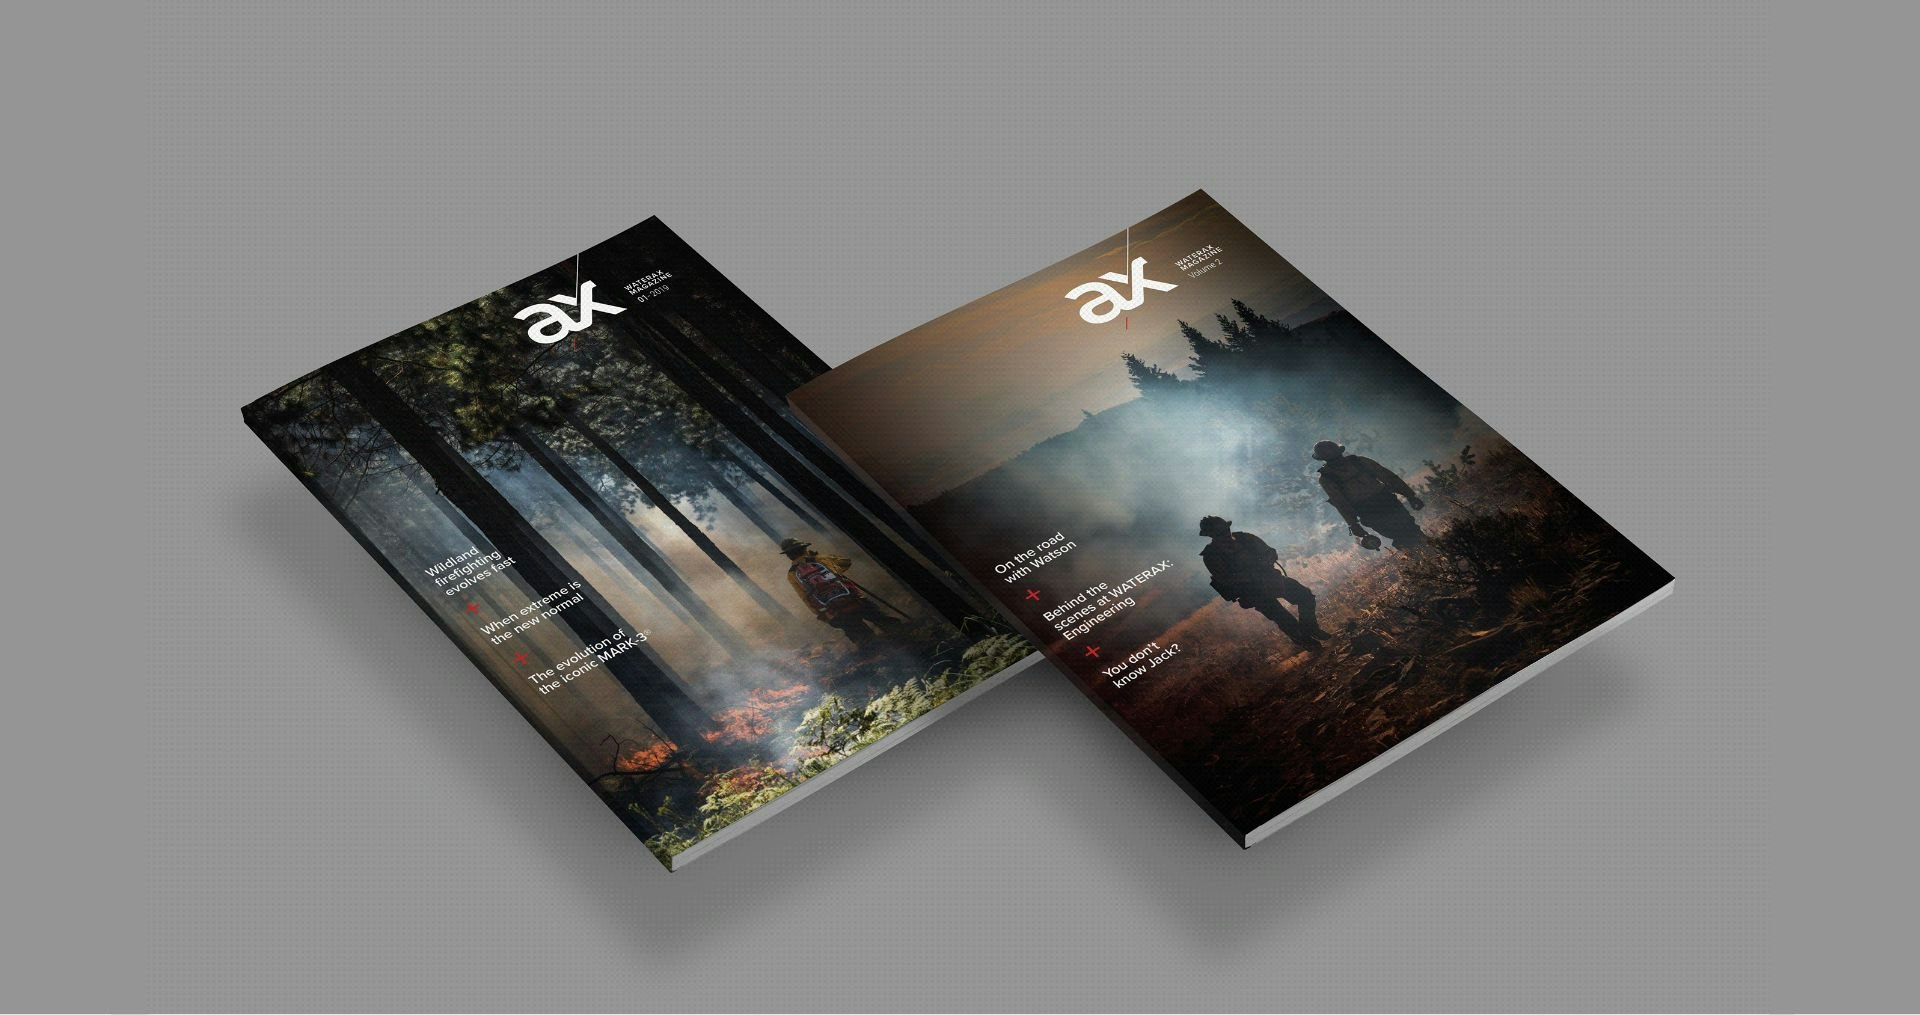 Ax magazines